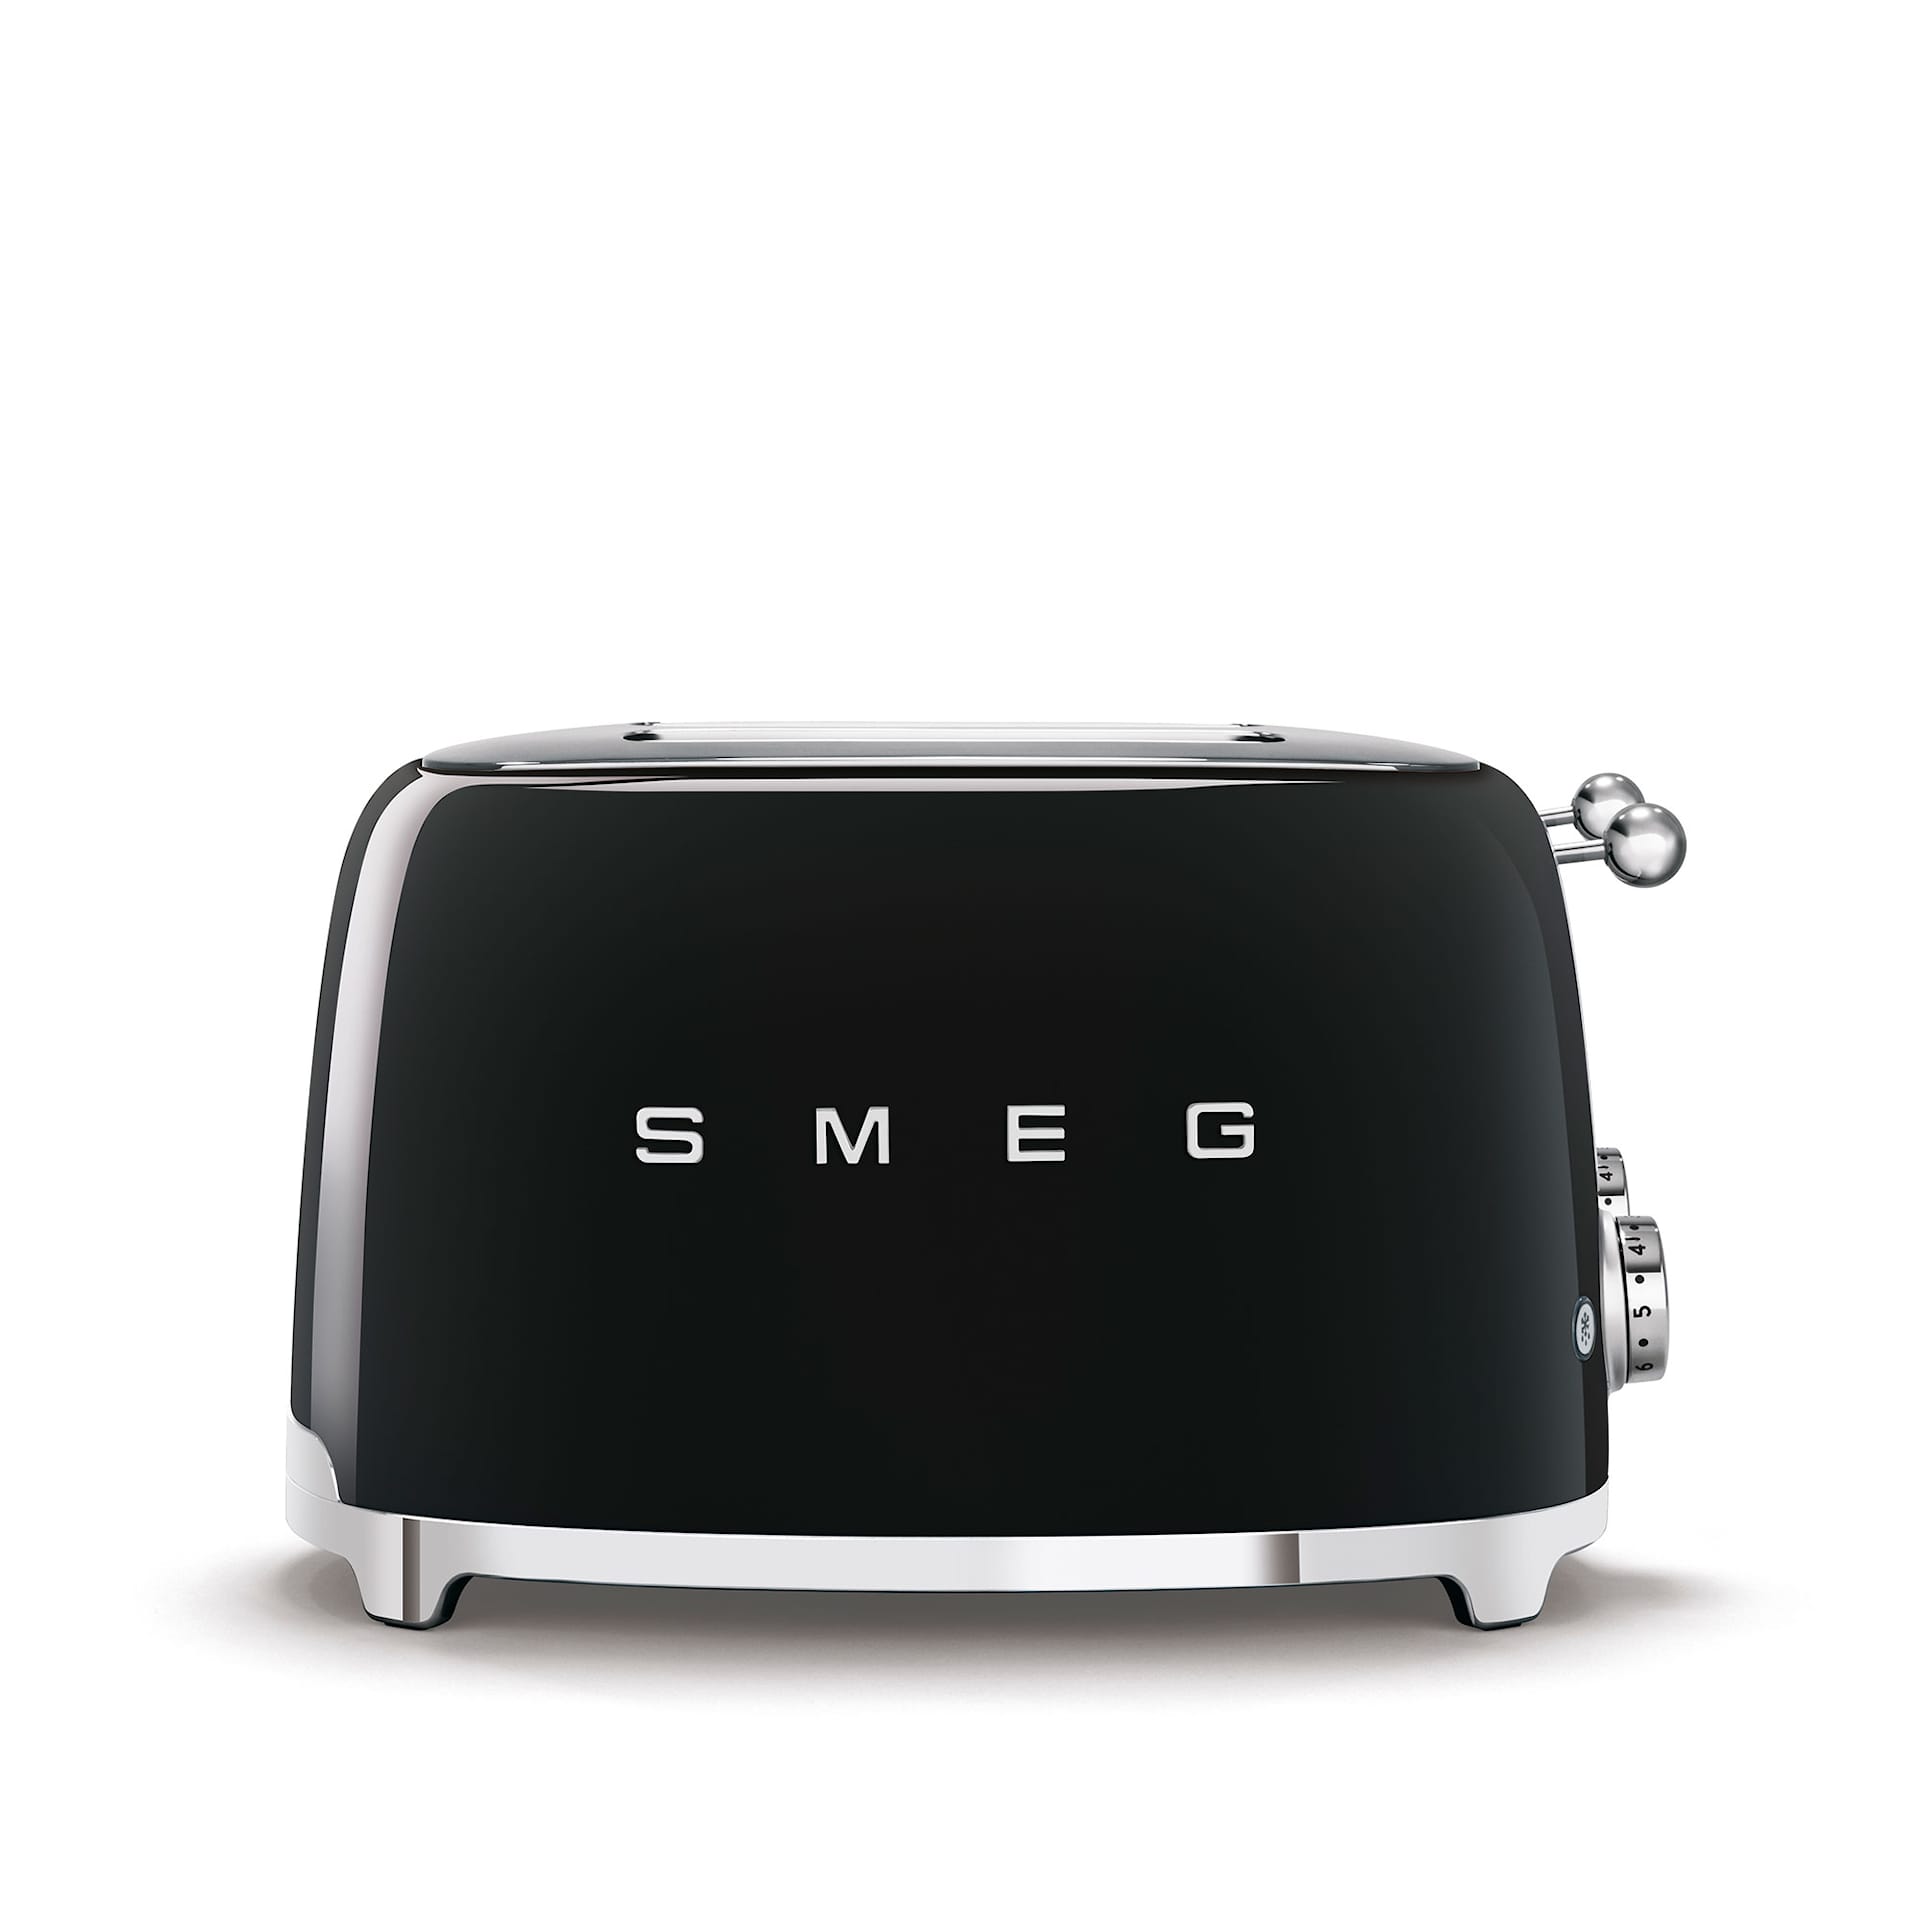 Smeg 4 Slot Toaster Black - Smeg - NO GA